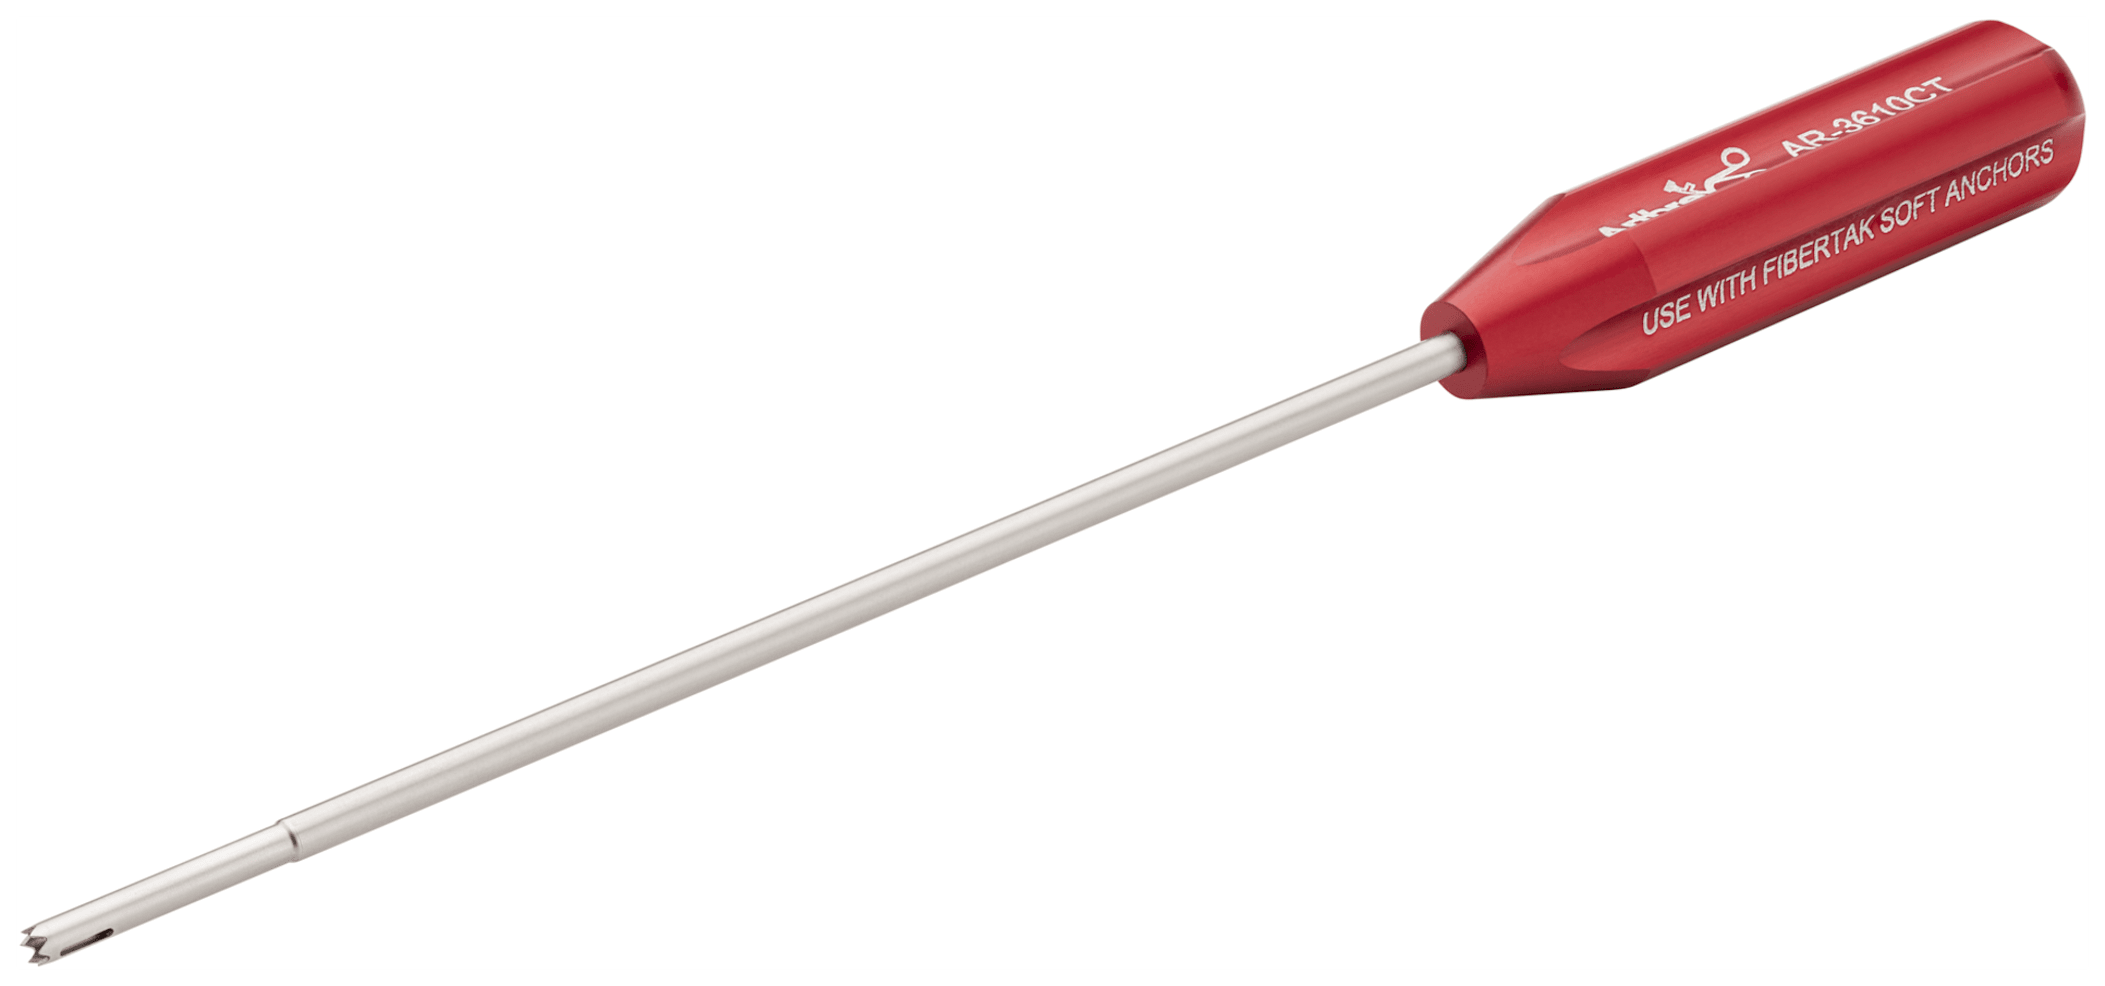 Circumferential Teeth Spear for FiberTak and Knotless FiberTak Anchors, Reusable